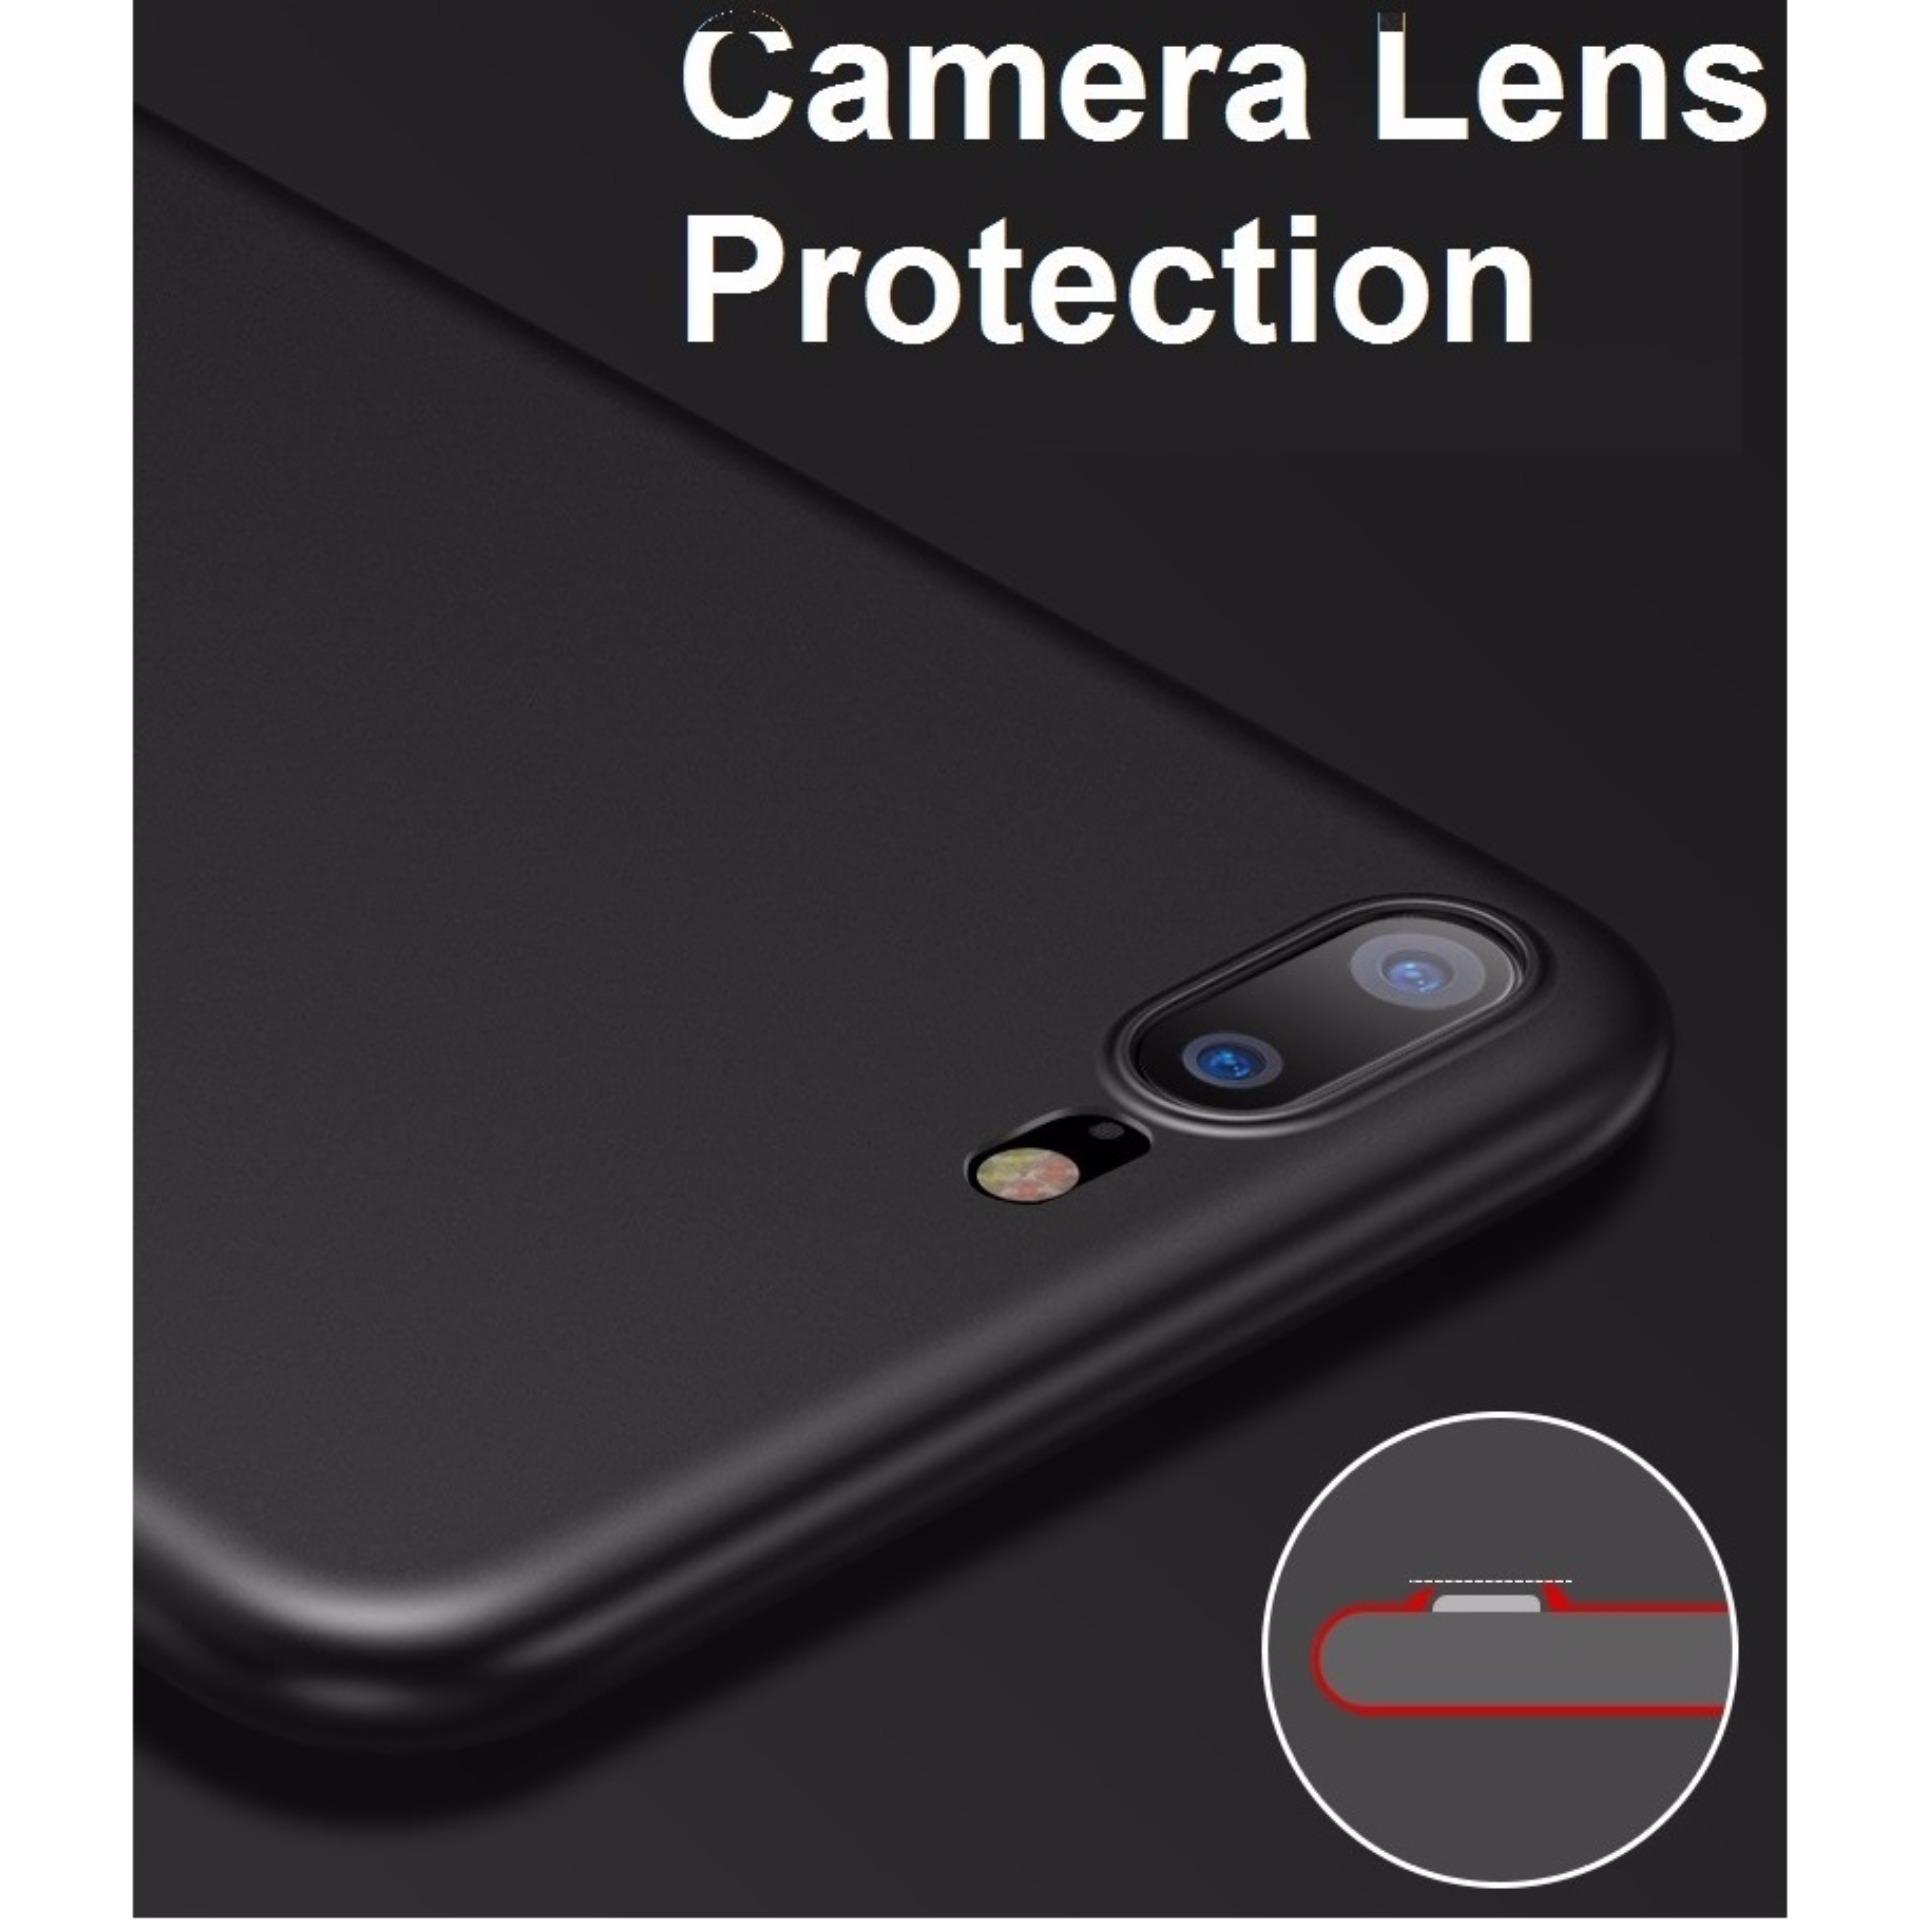 (Black) Ultra Slim Matte Precise Fit Matte Case Casing Cover for iPhone 8 Plus / iPhone 7 Plus